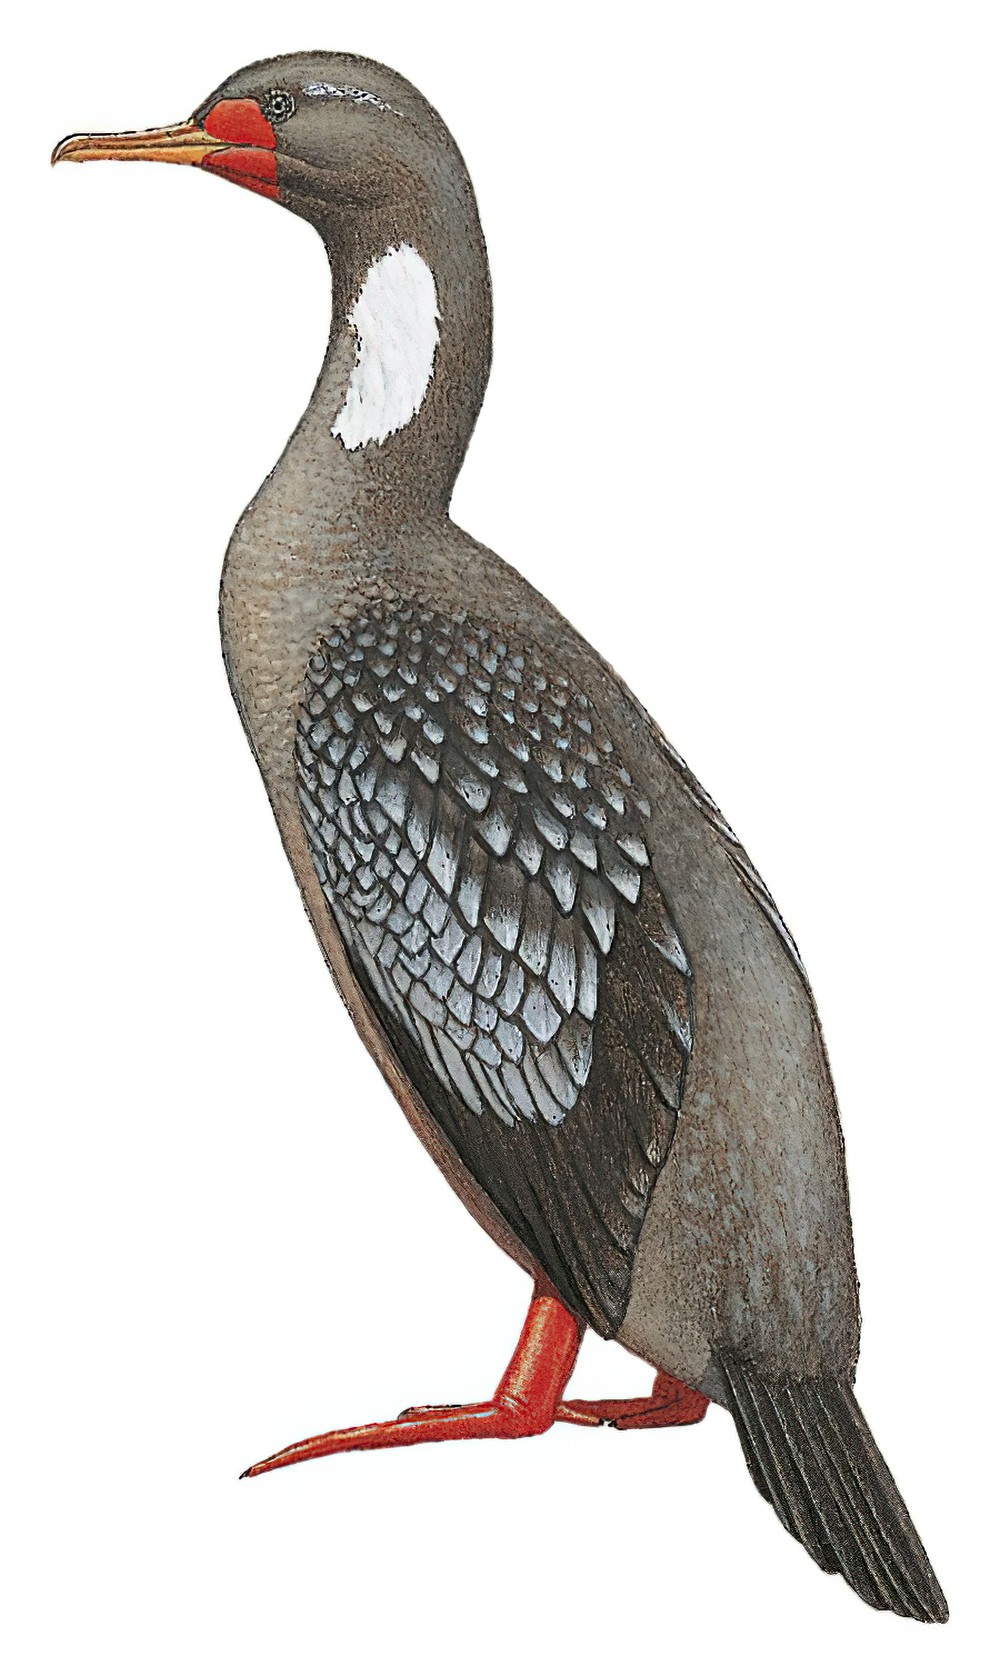 Red-legged Cormorant / Phalacrocorax gaimardi